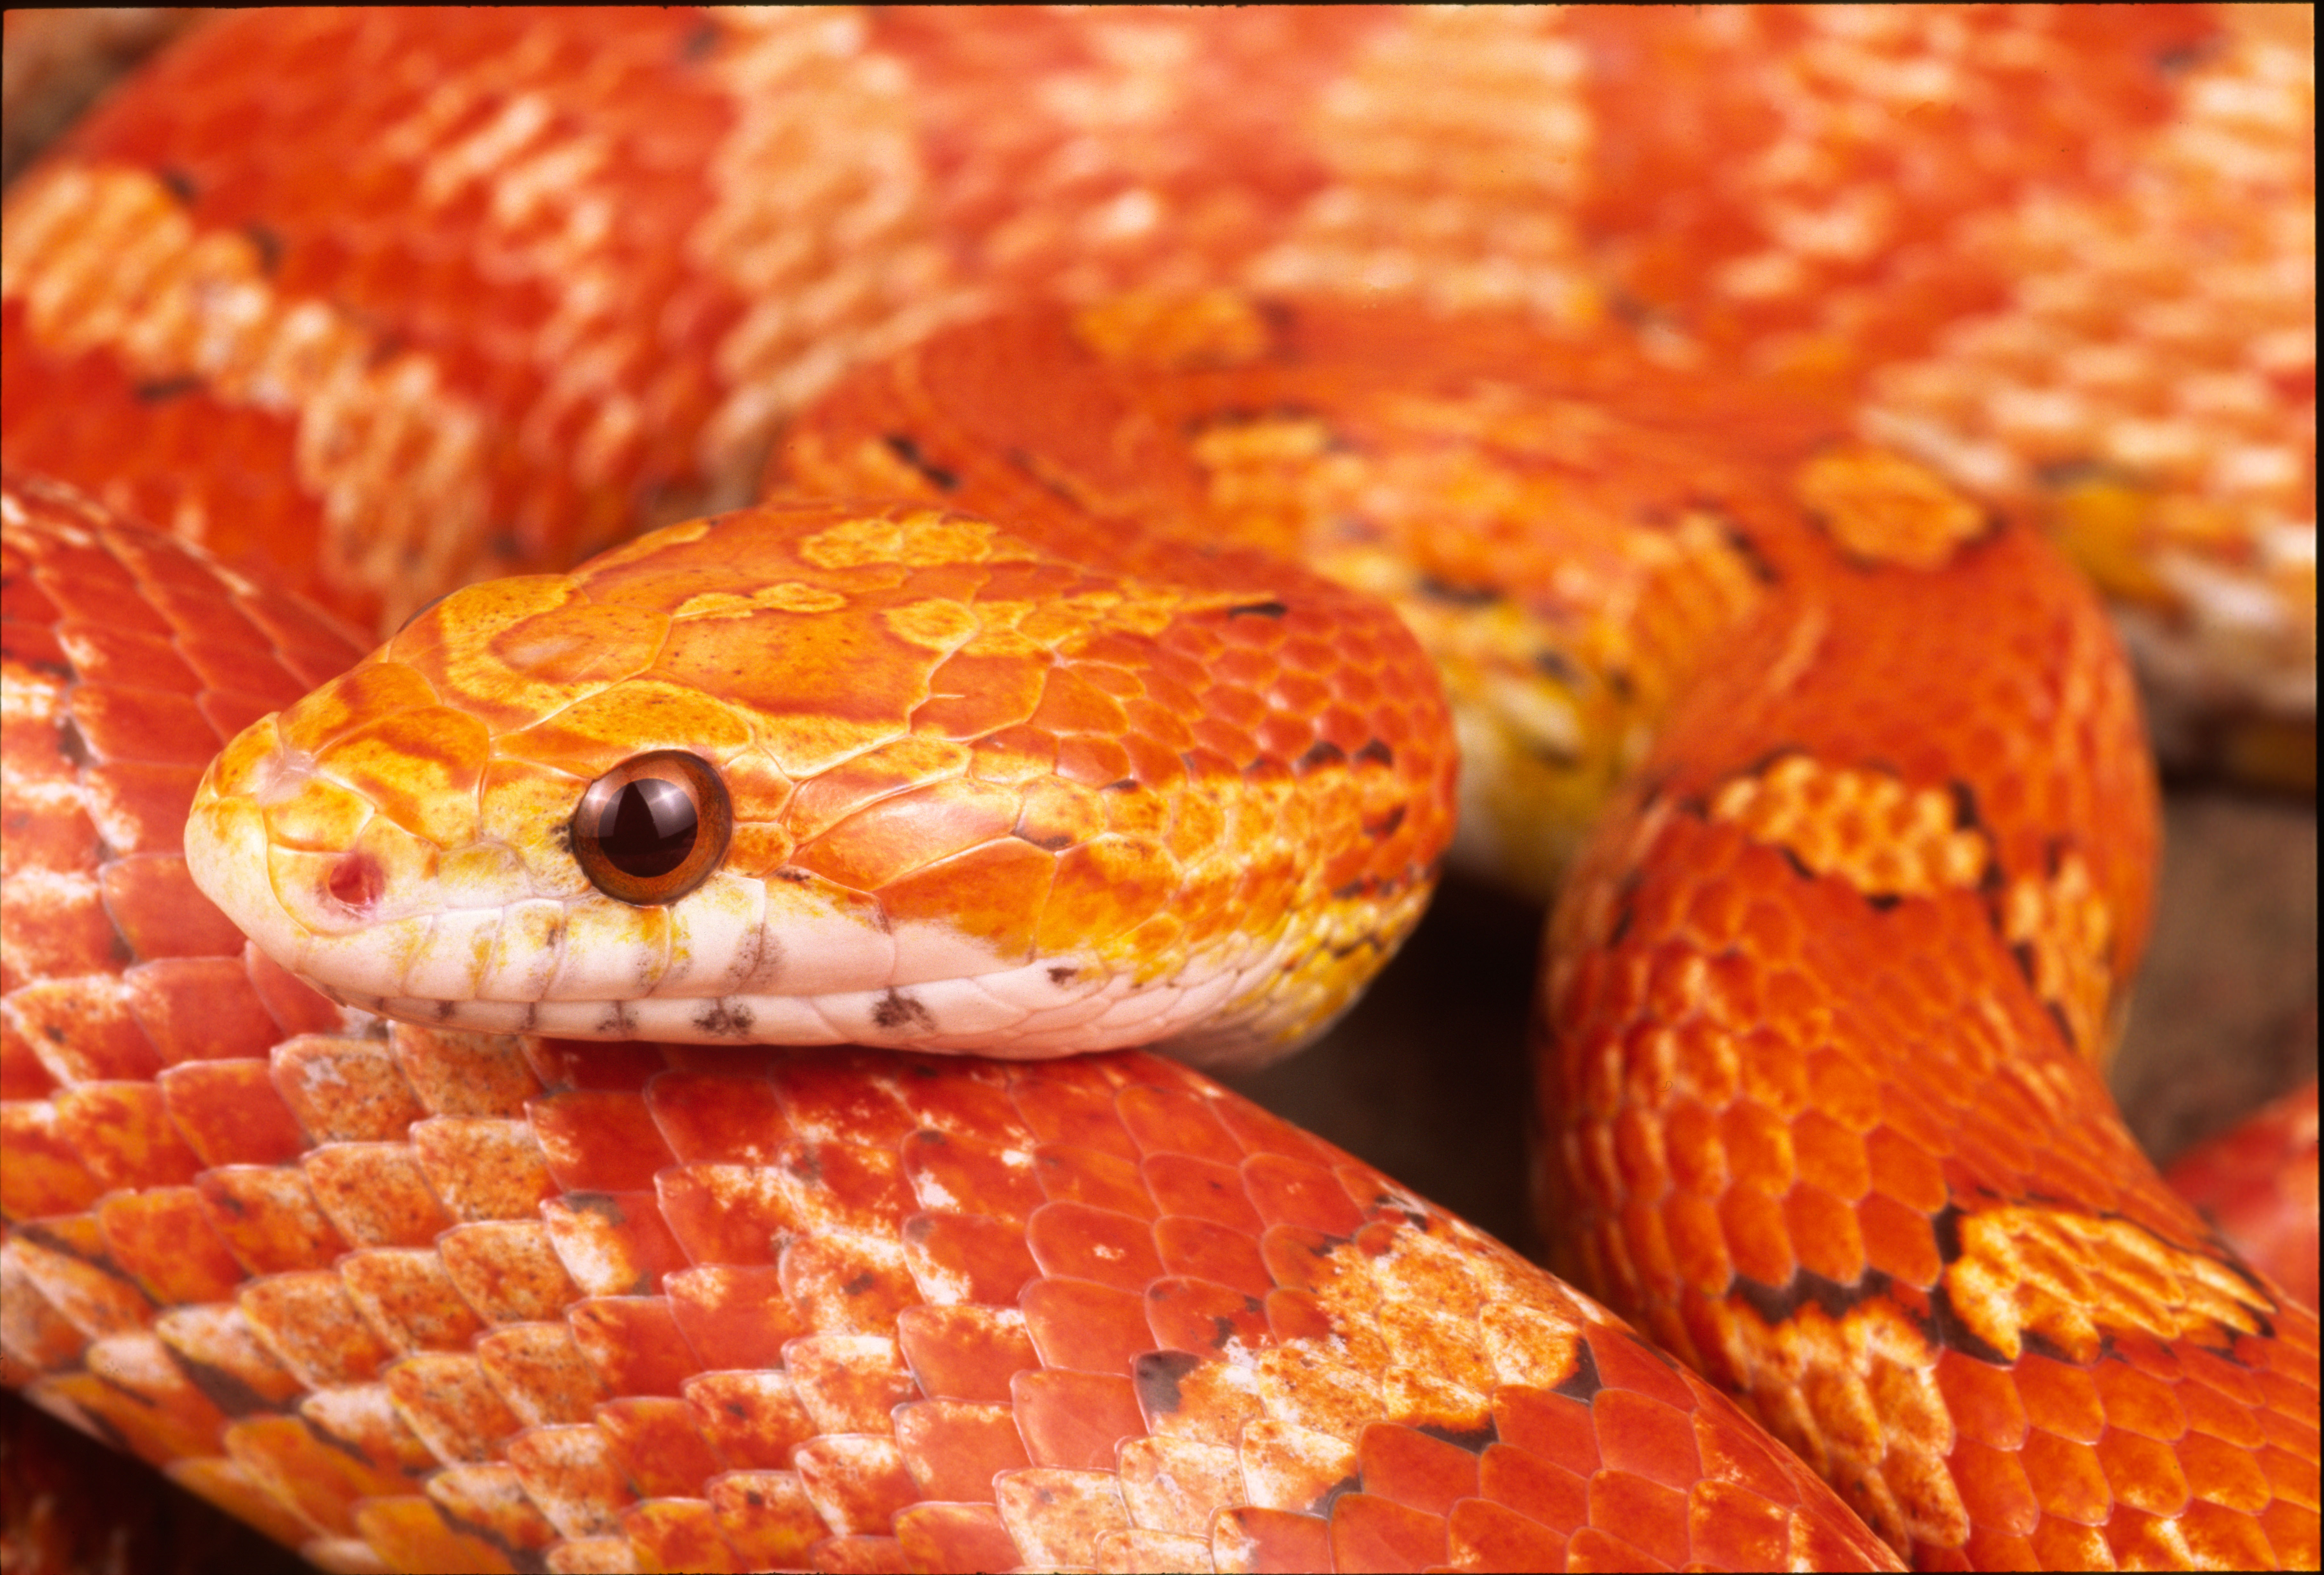 HD wallpaper of a vibrant orange and yellow corn snake up close, providing a vivid desktop background.